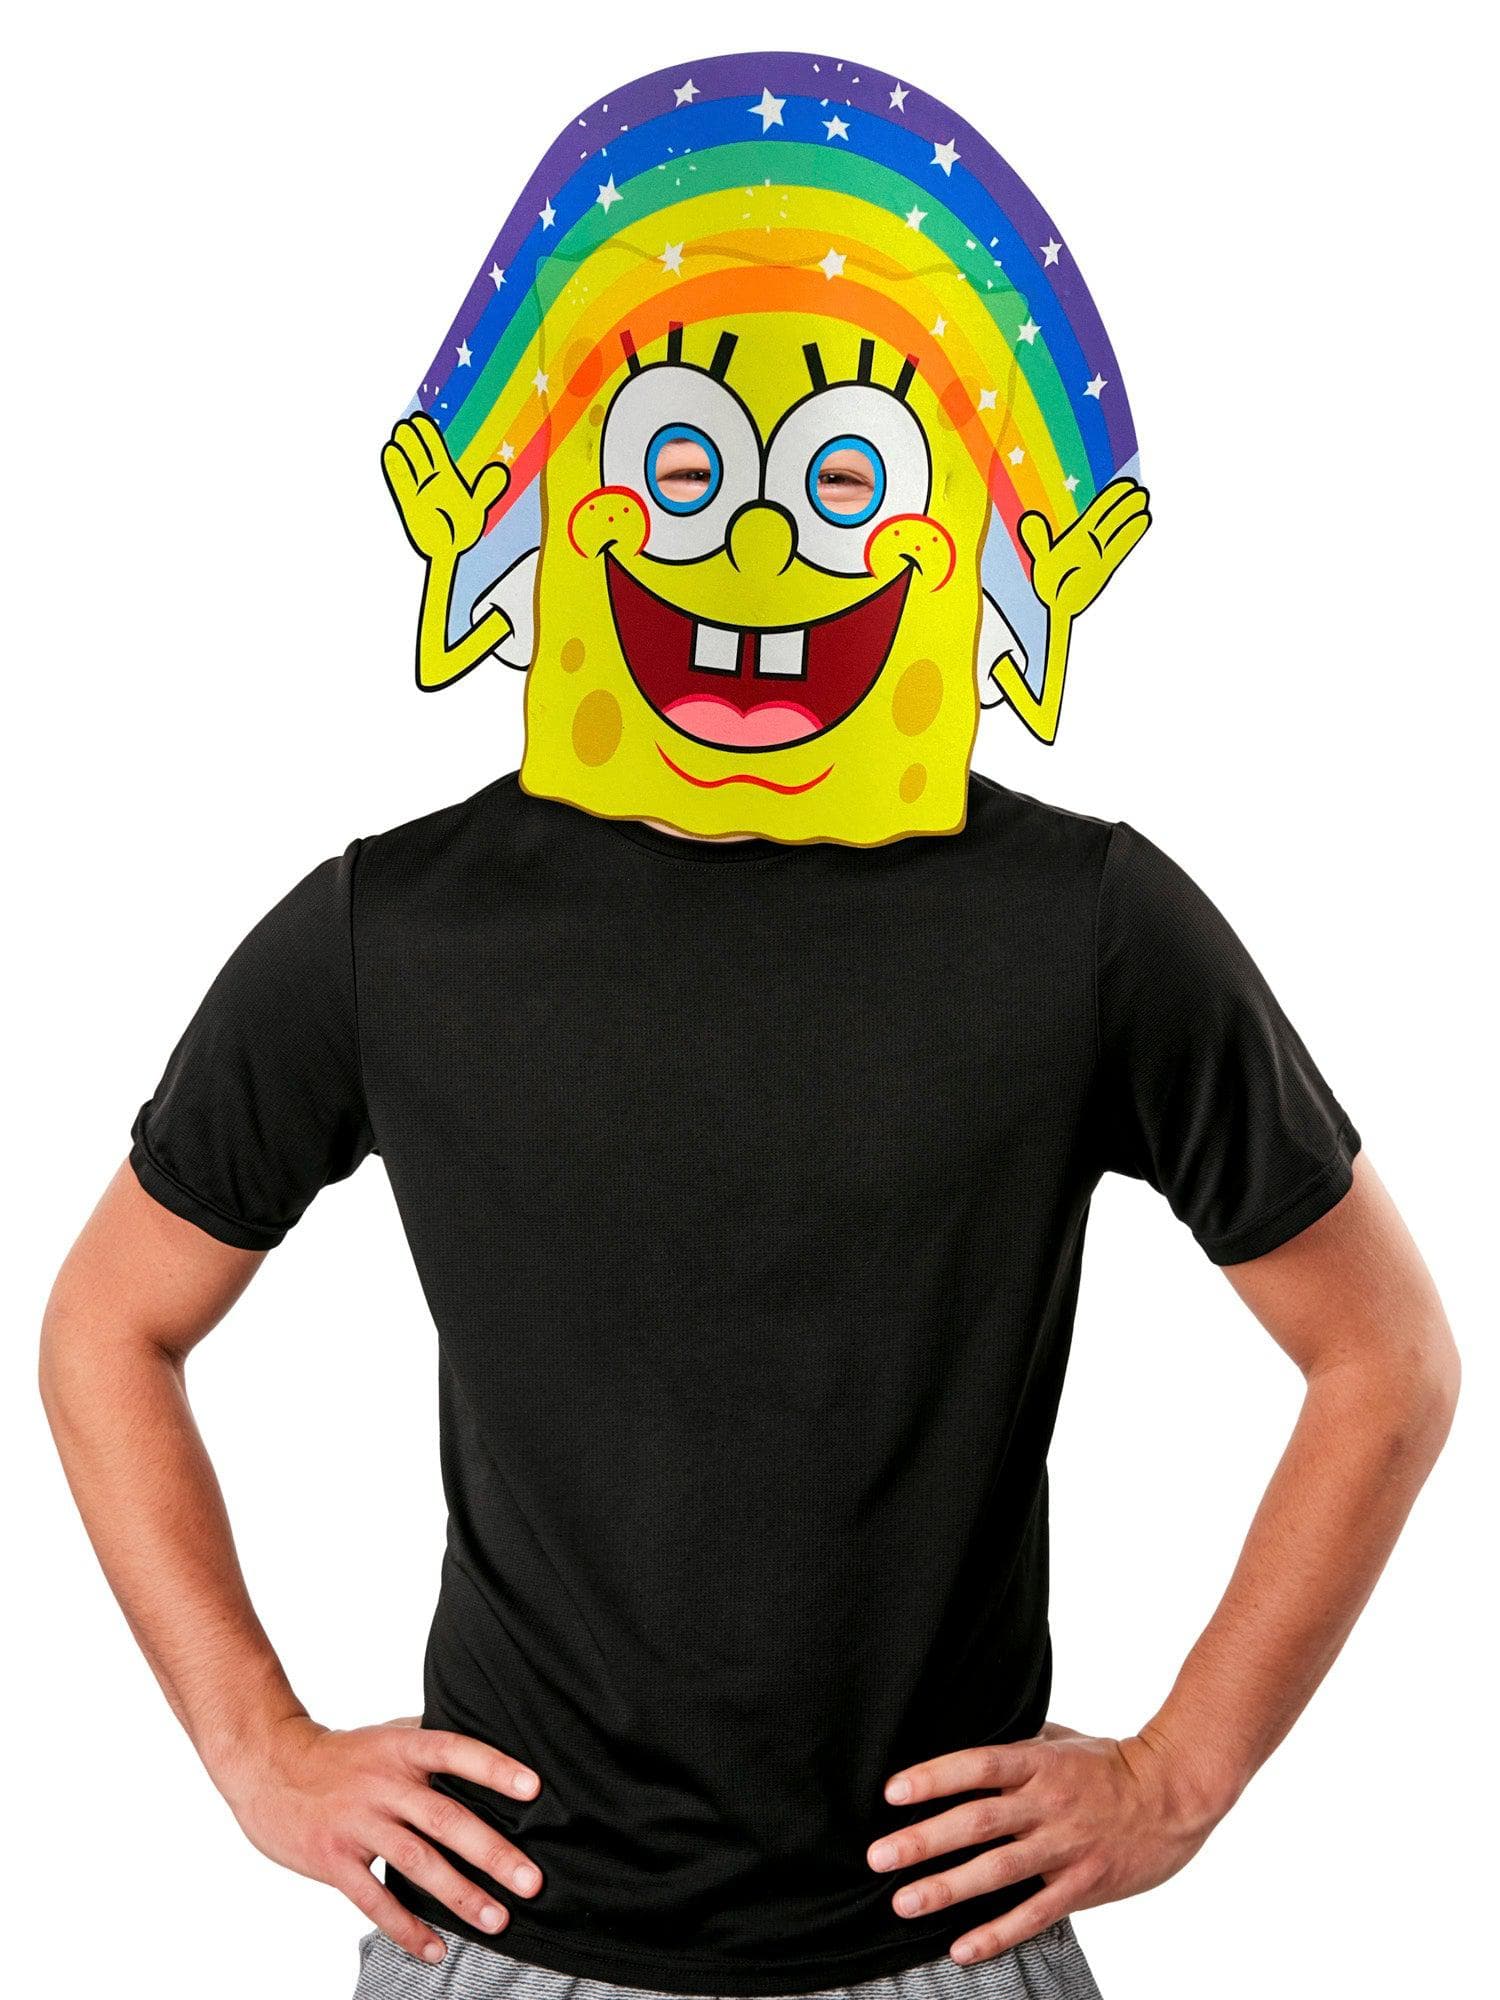 Adult Rainbow SpongeBob SquarePants Imagination Mask - costumes.com